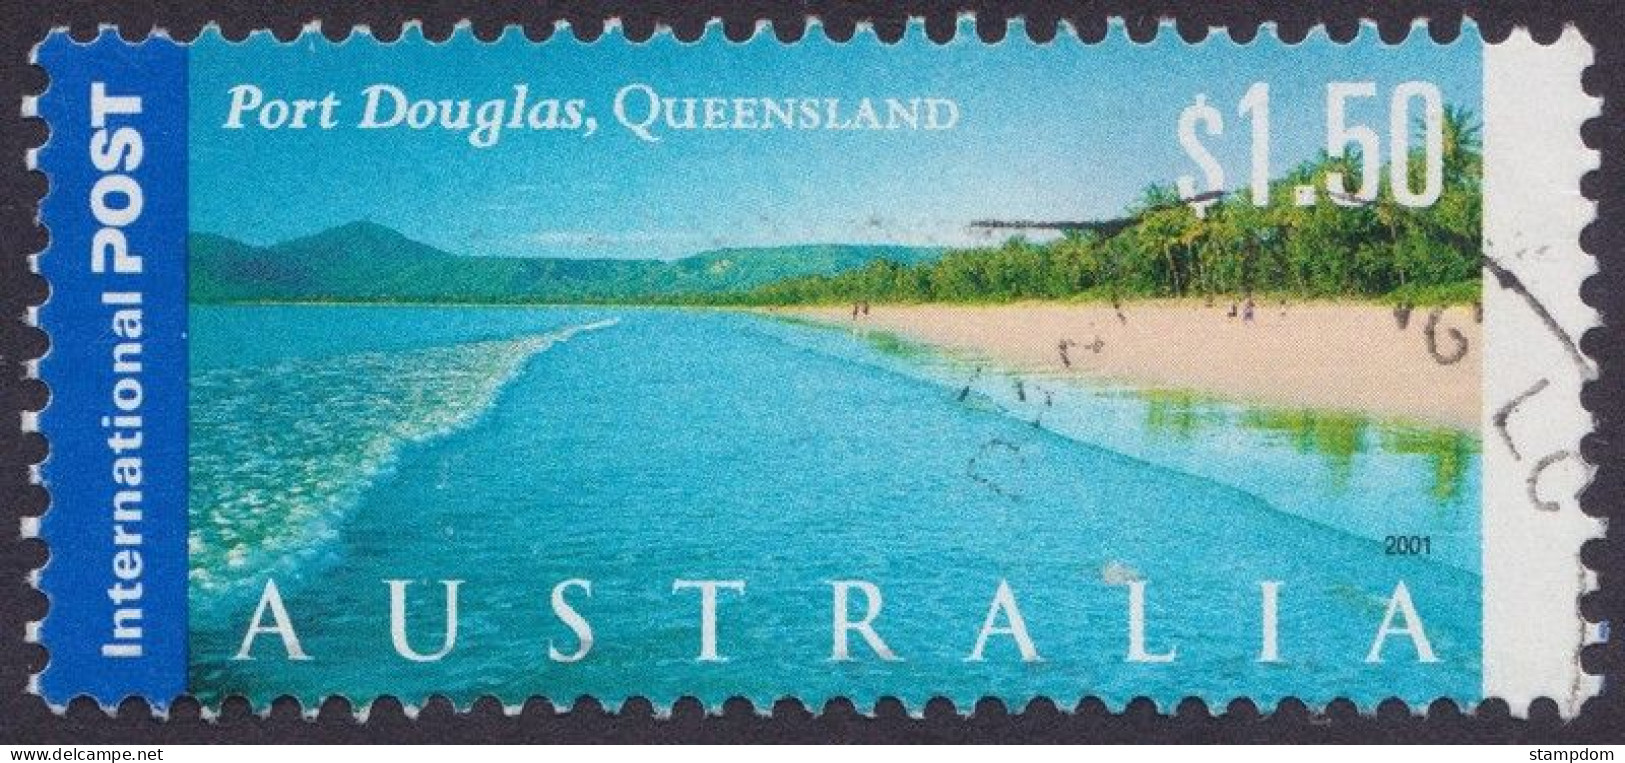 AUSTRALIA 2001 Tourist Attractions $1.50 Port Douglas Sc#1981 USED @O383 - Usati